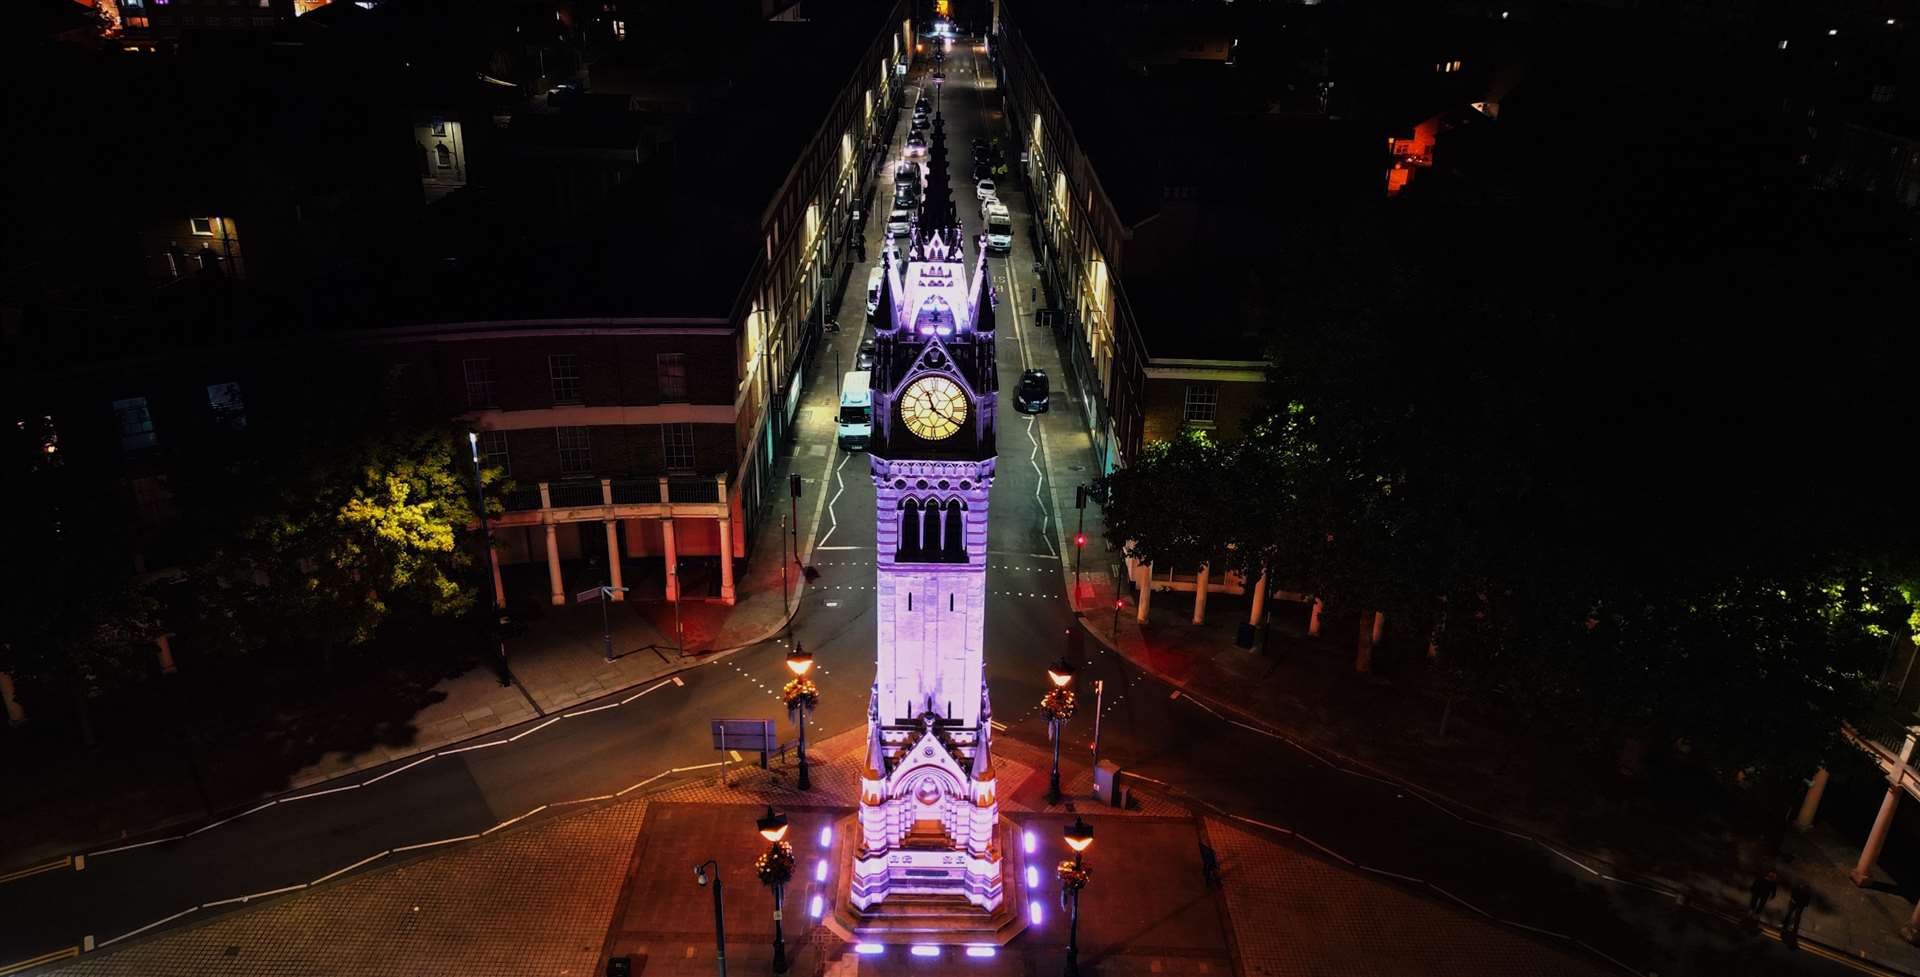 Gravesend's Clock Tower is lit purple in honour of Queen Elizabeth II. Picture: Jason Arthur